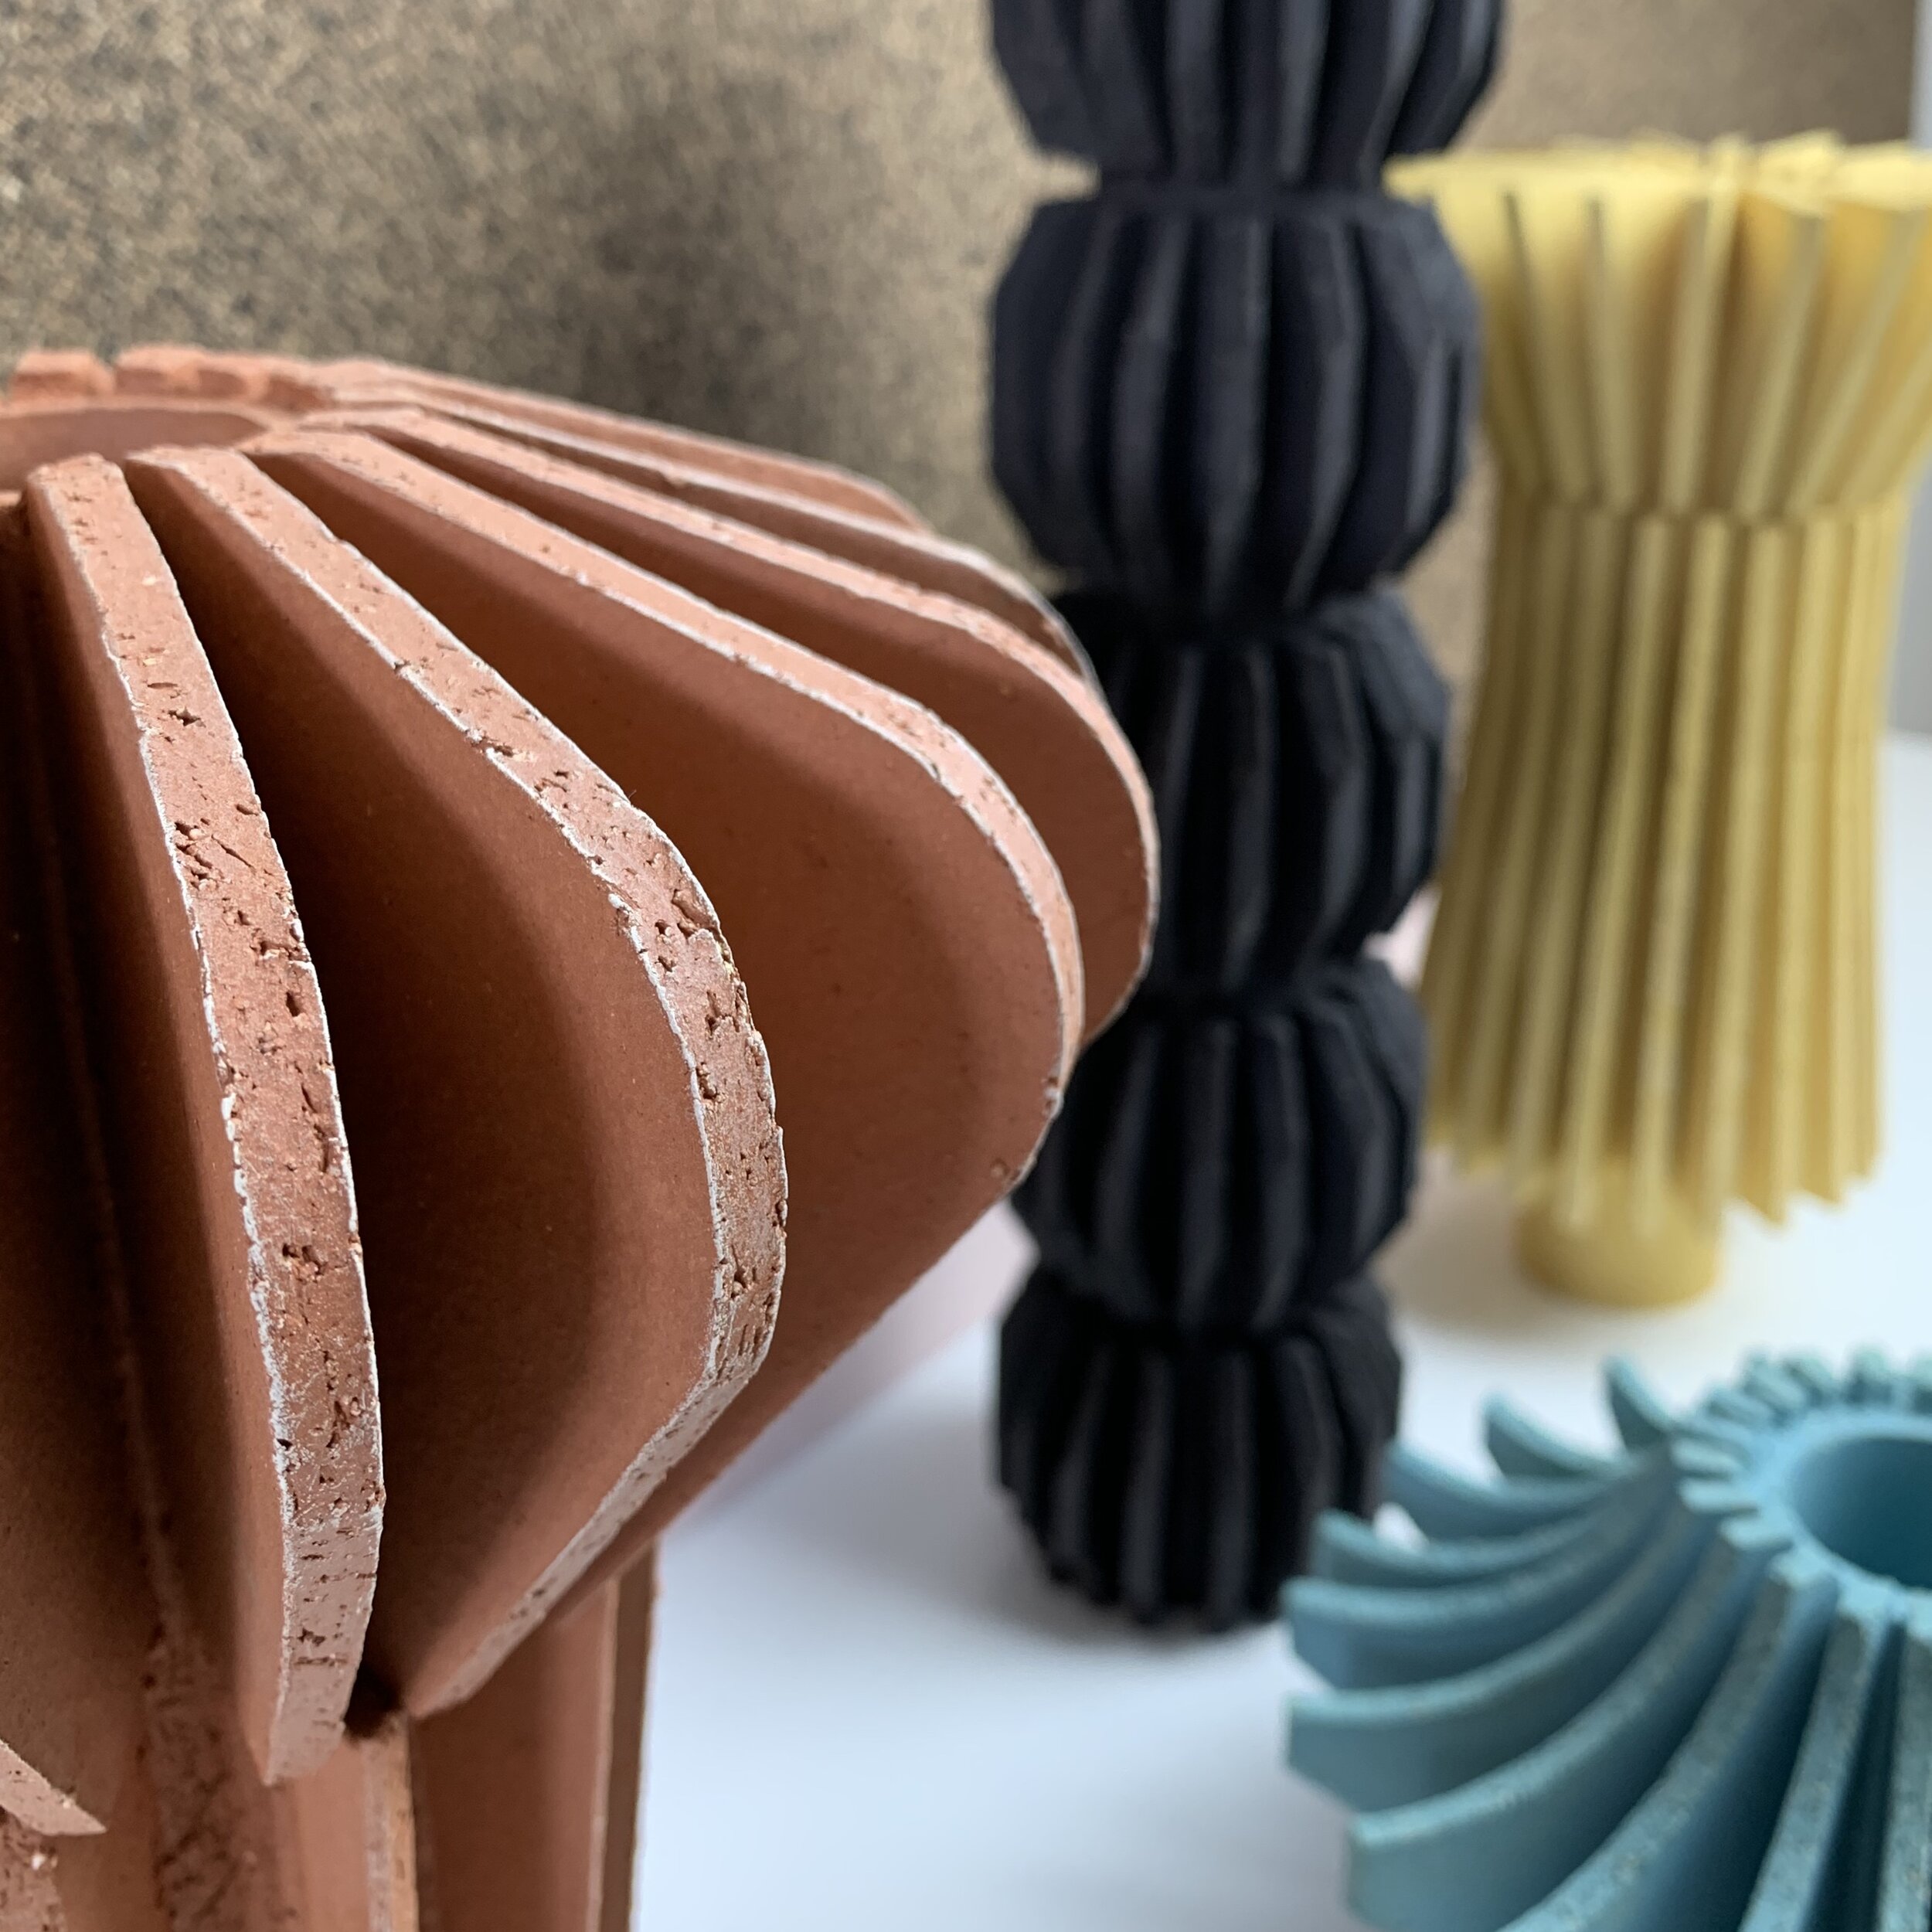 Handmade ceramic vases